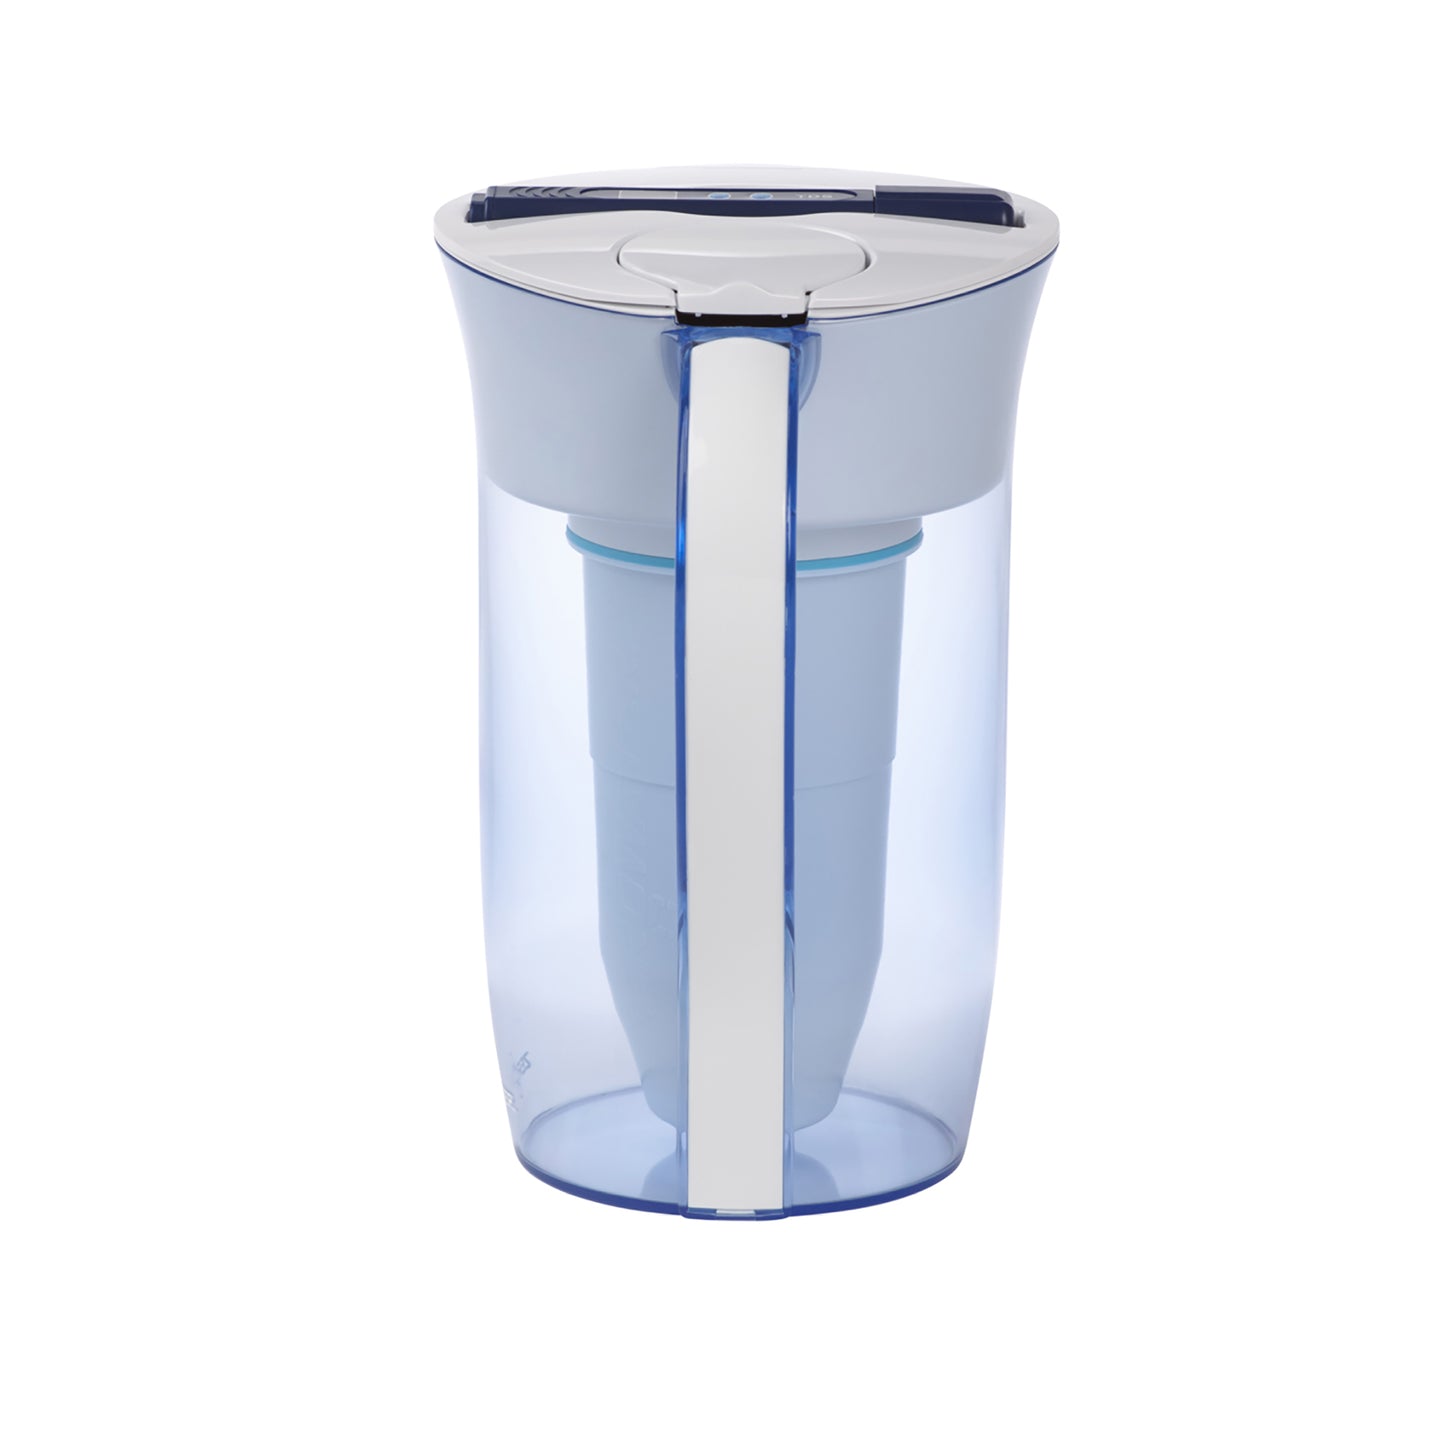 Pudełko Combi: Okrągły dzbanek o pojemności 2,4 litra, w komplecie. 3 filtry | Combibox okrągły dzbanek na 10 filiżanek (2,4 litra) + 2 filtry